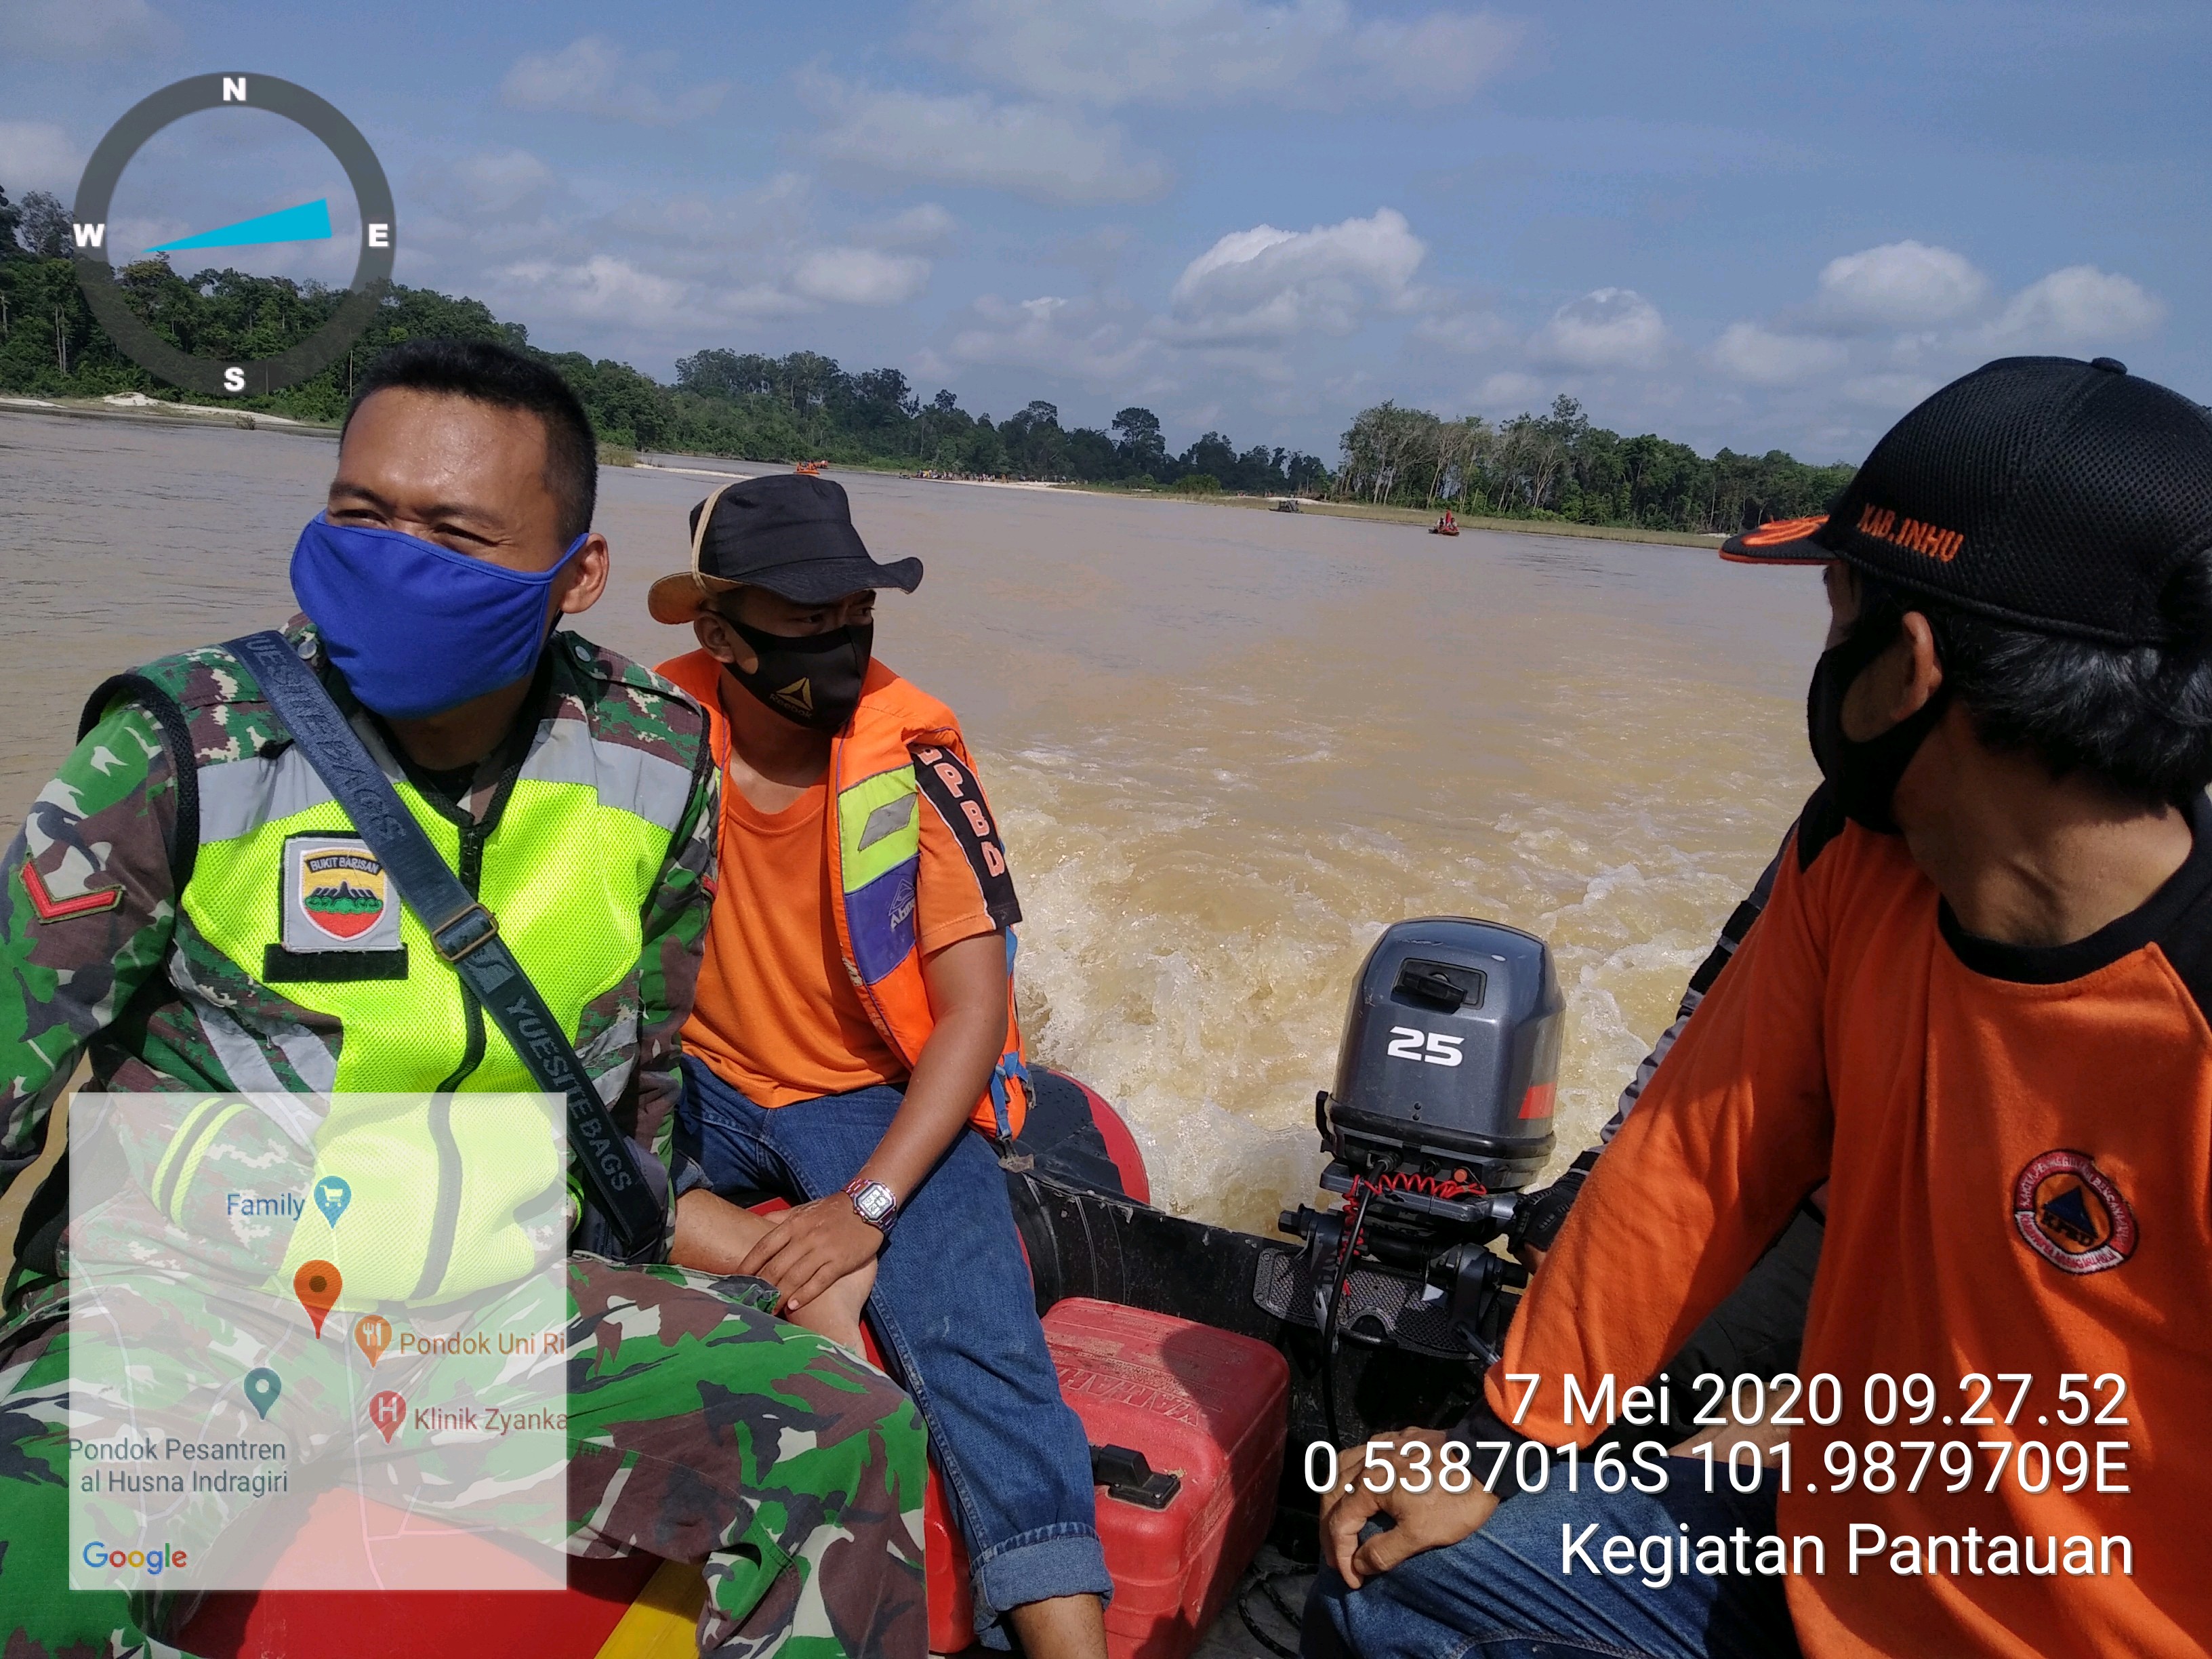 Upaya Pencarian Korban Tenggelam, Seluruh Personel Masih Lakukan Pencarian Menyisir Sungai